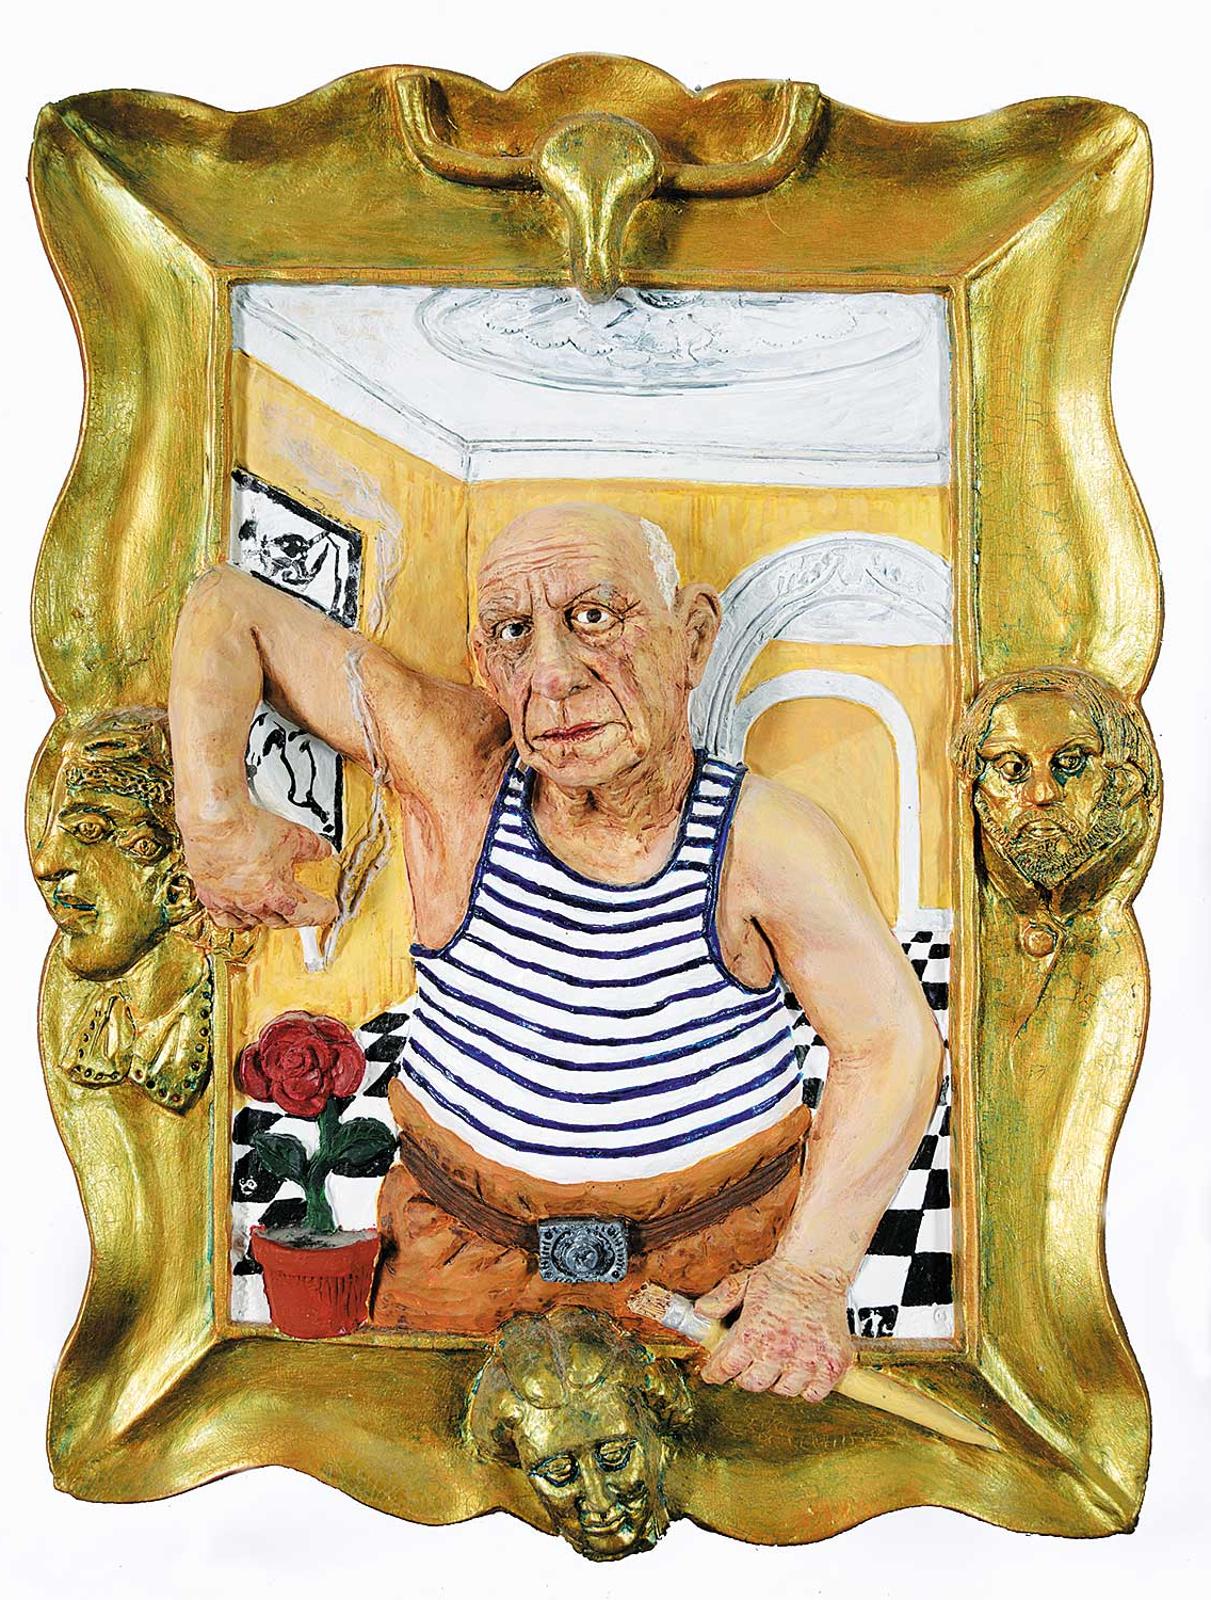 Wayne McLean (1962) - Untitled - Picasso, Self Portrait  #4/20